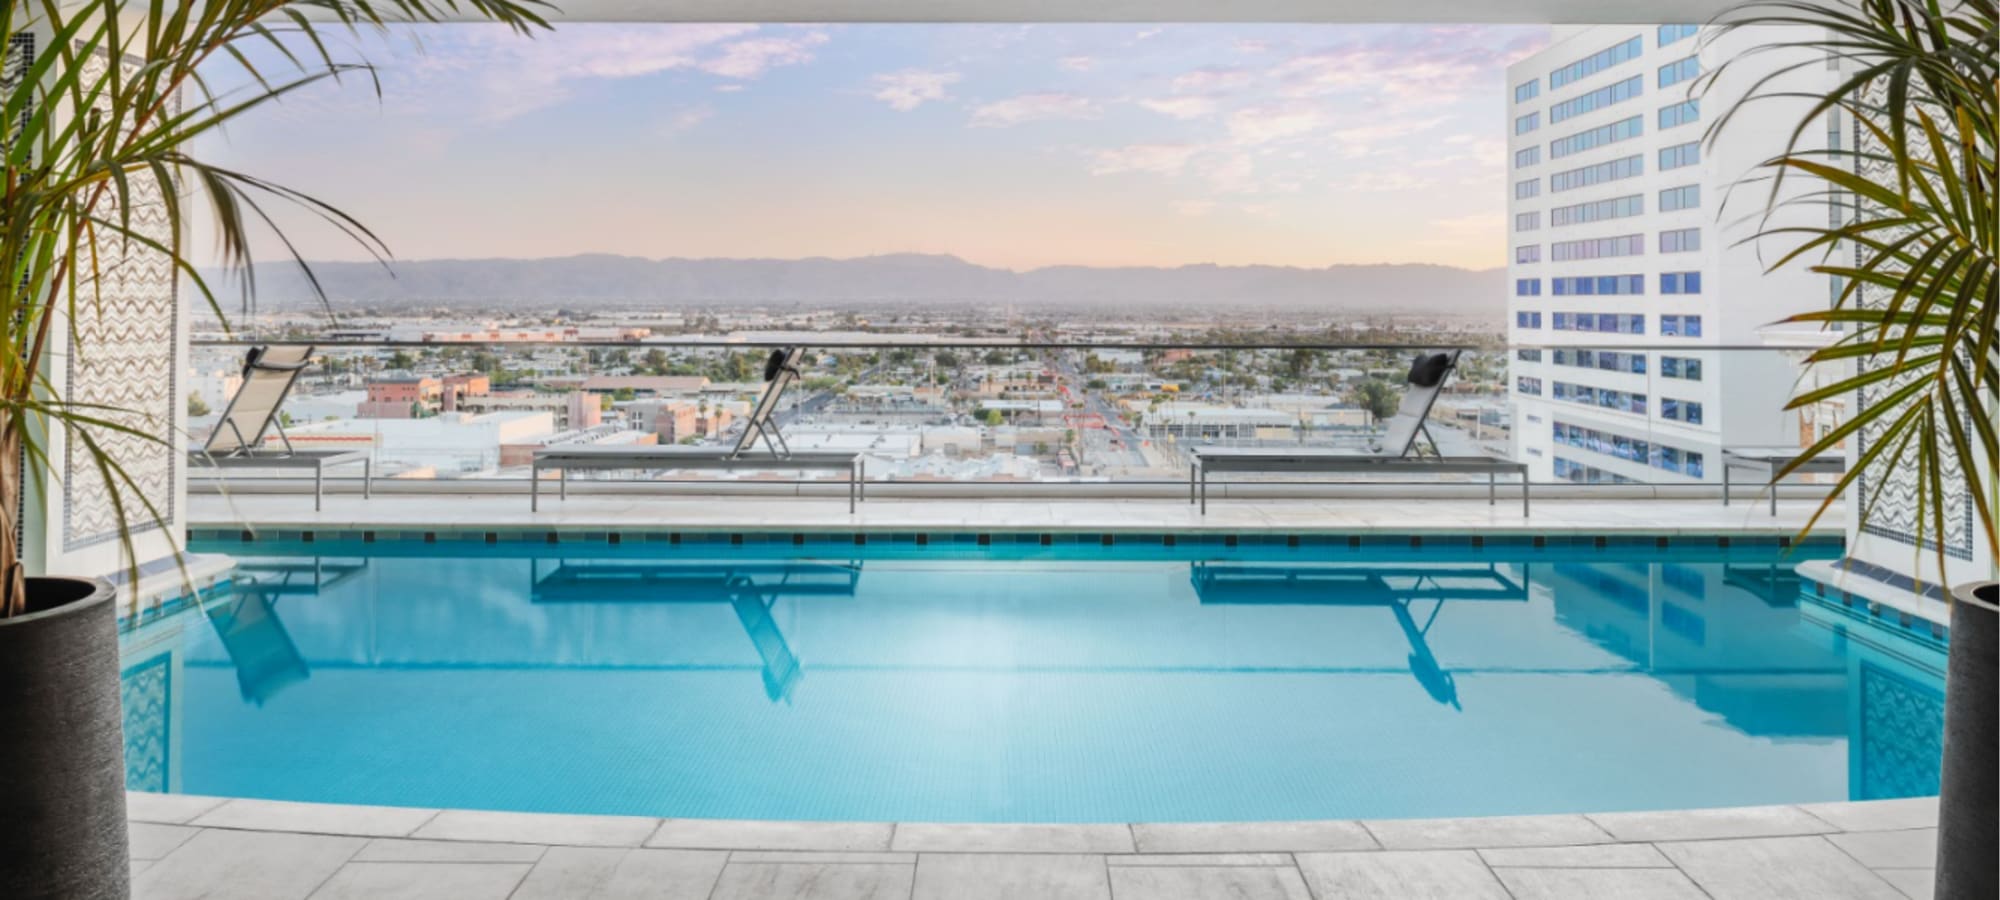 Luxurious swimming pool at CityScape Residences in Phoenix, Arizona